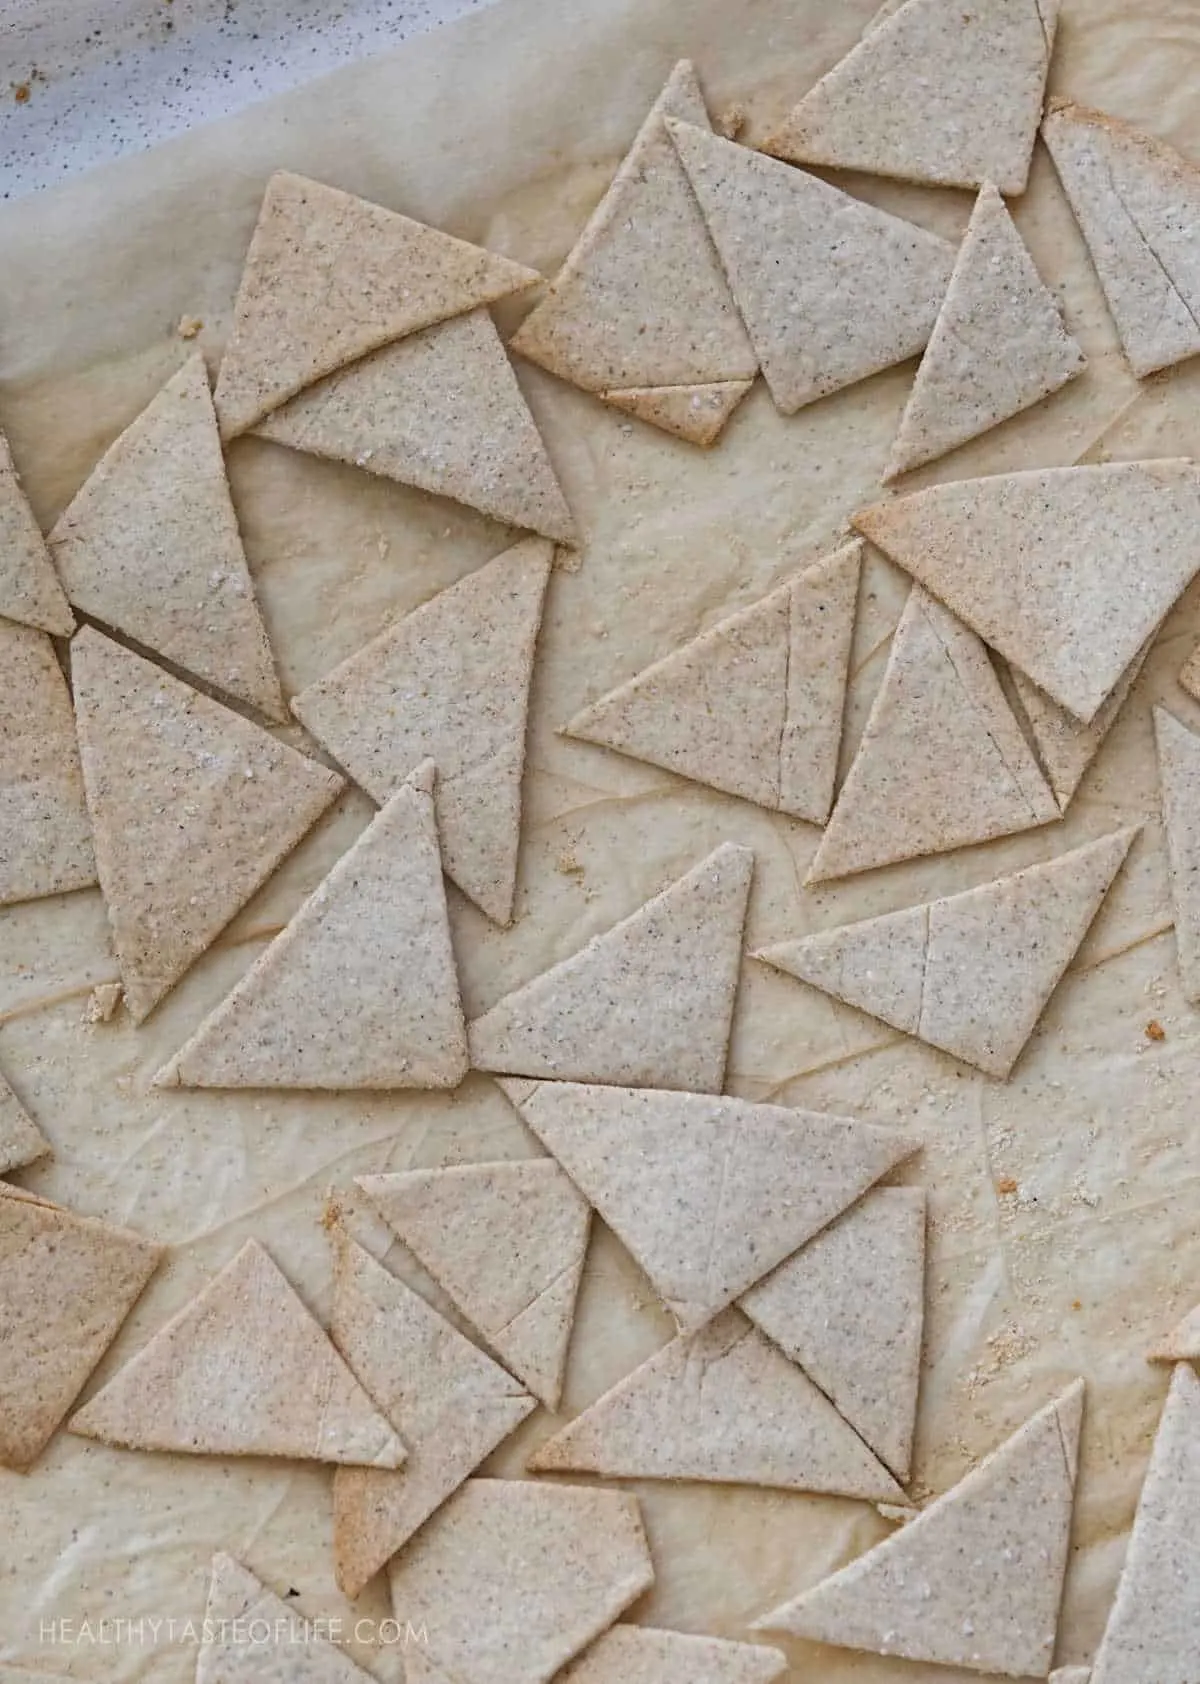 Grain free cassava crackers on a cookie sheet.